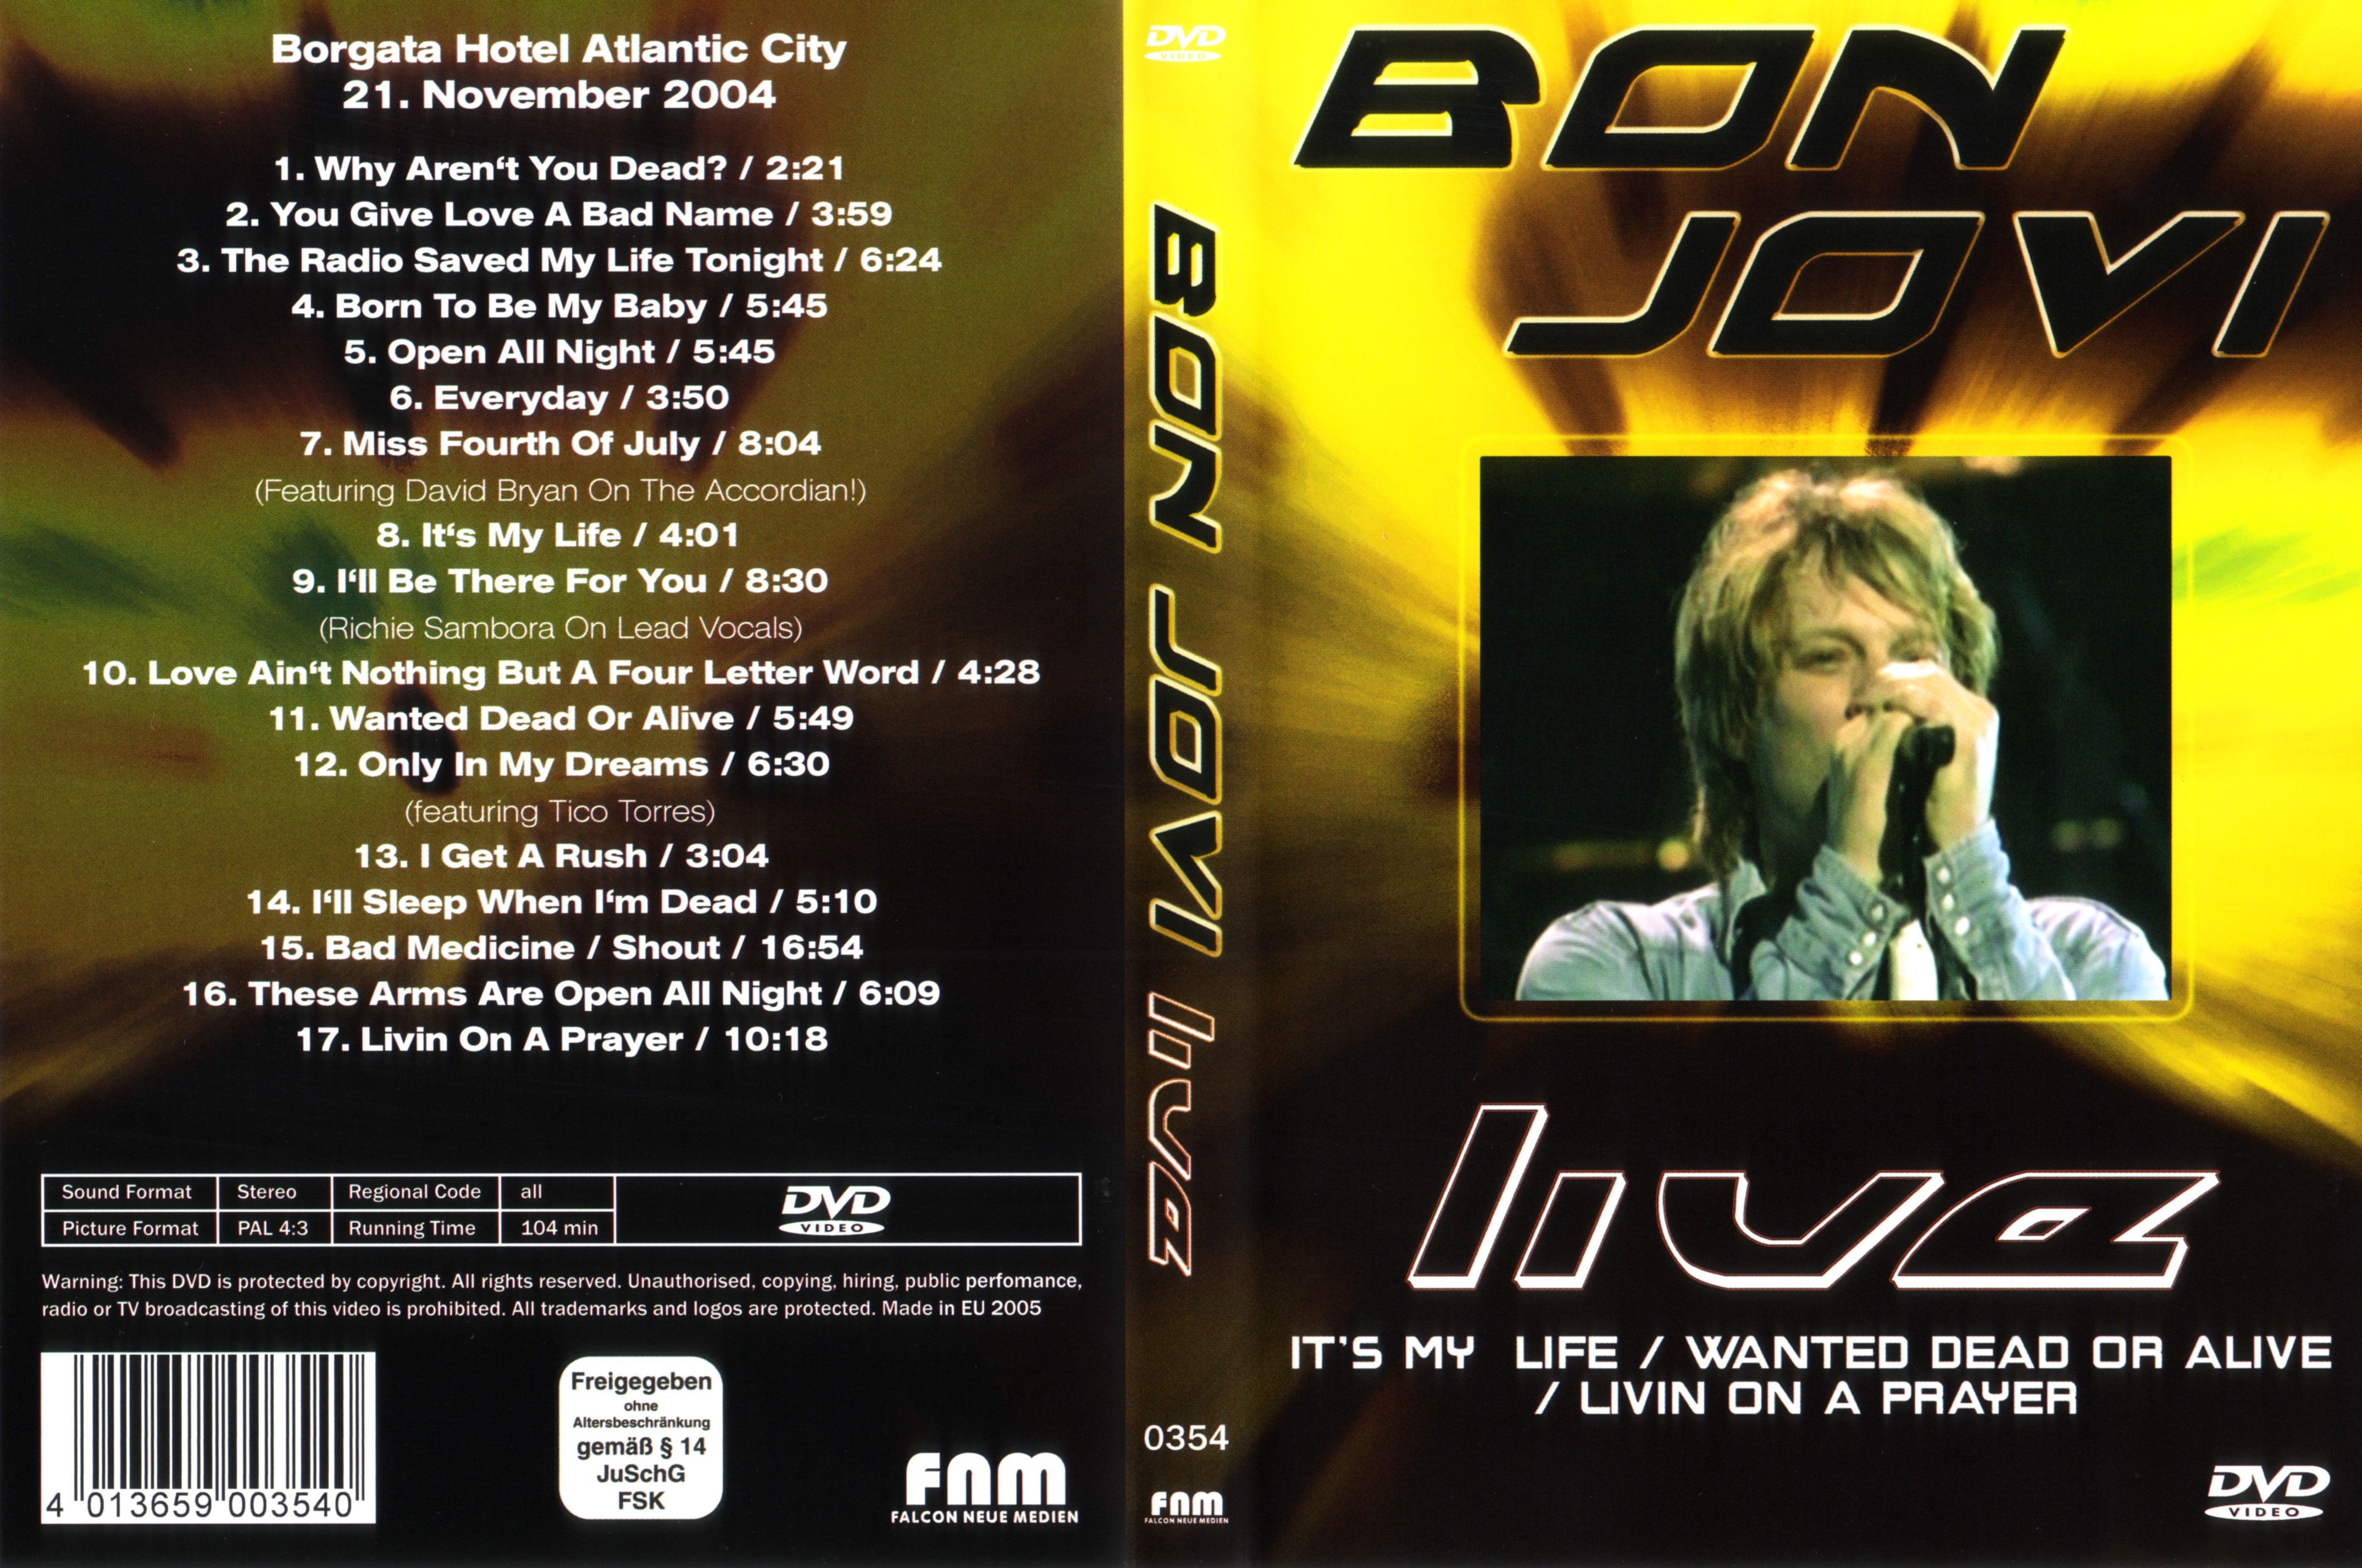 Jaquette DVD Bon jovi Live borgata hotel atlantic city